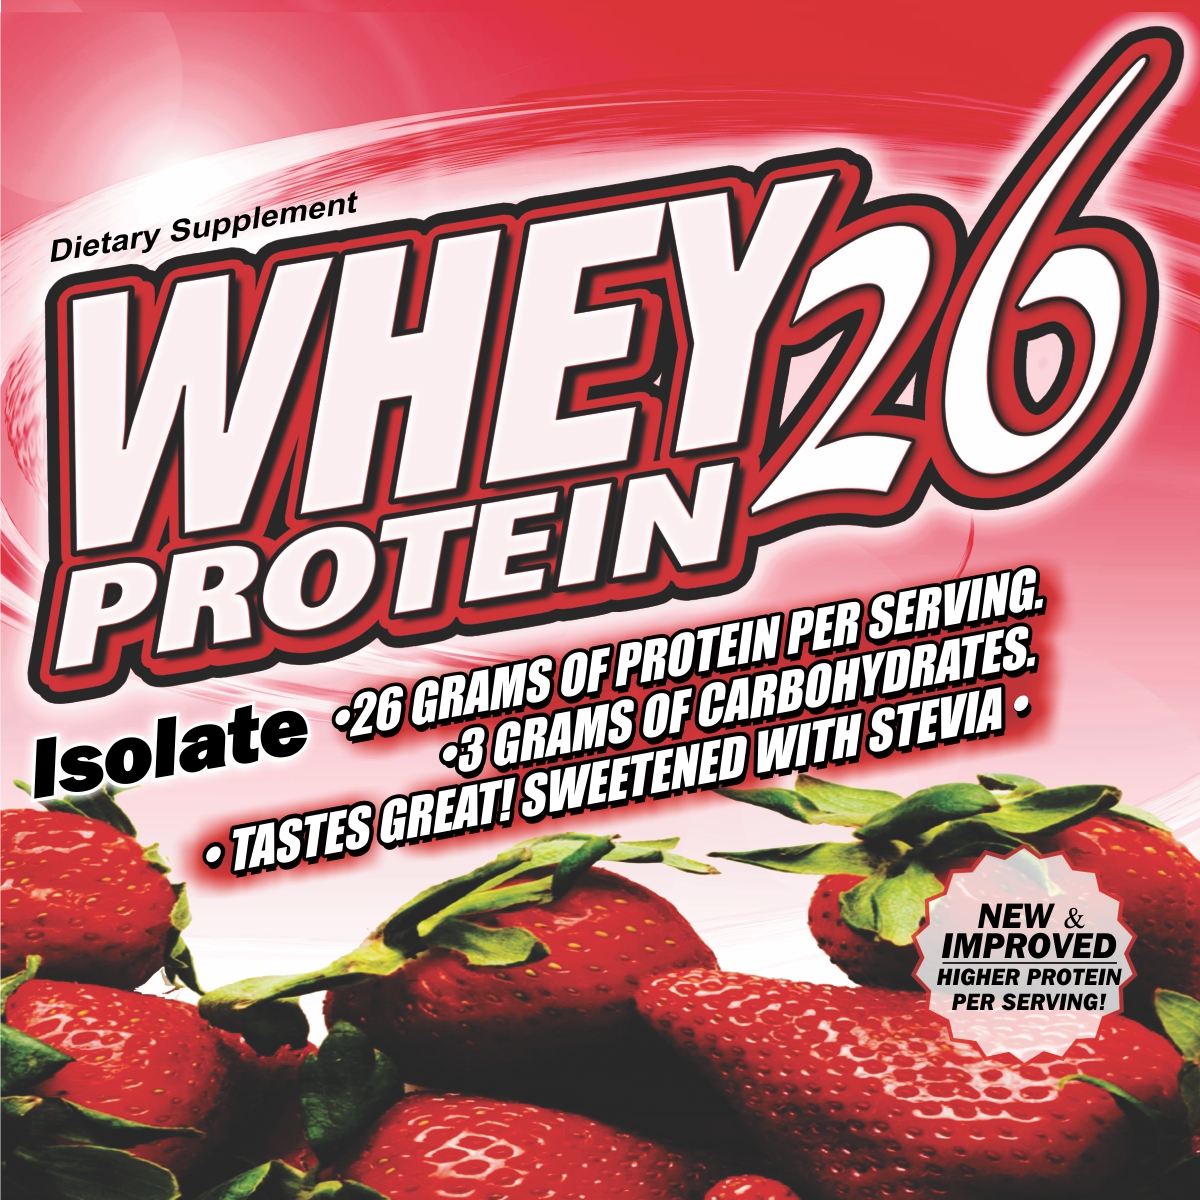 Private Label Whey-26 Strawberry